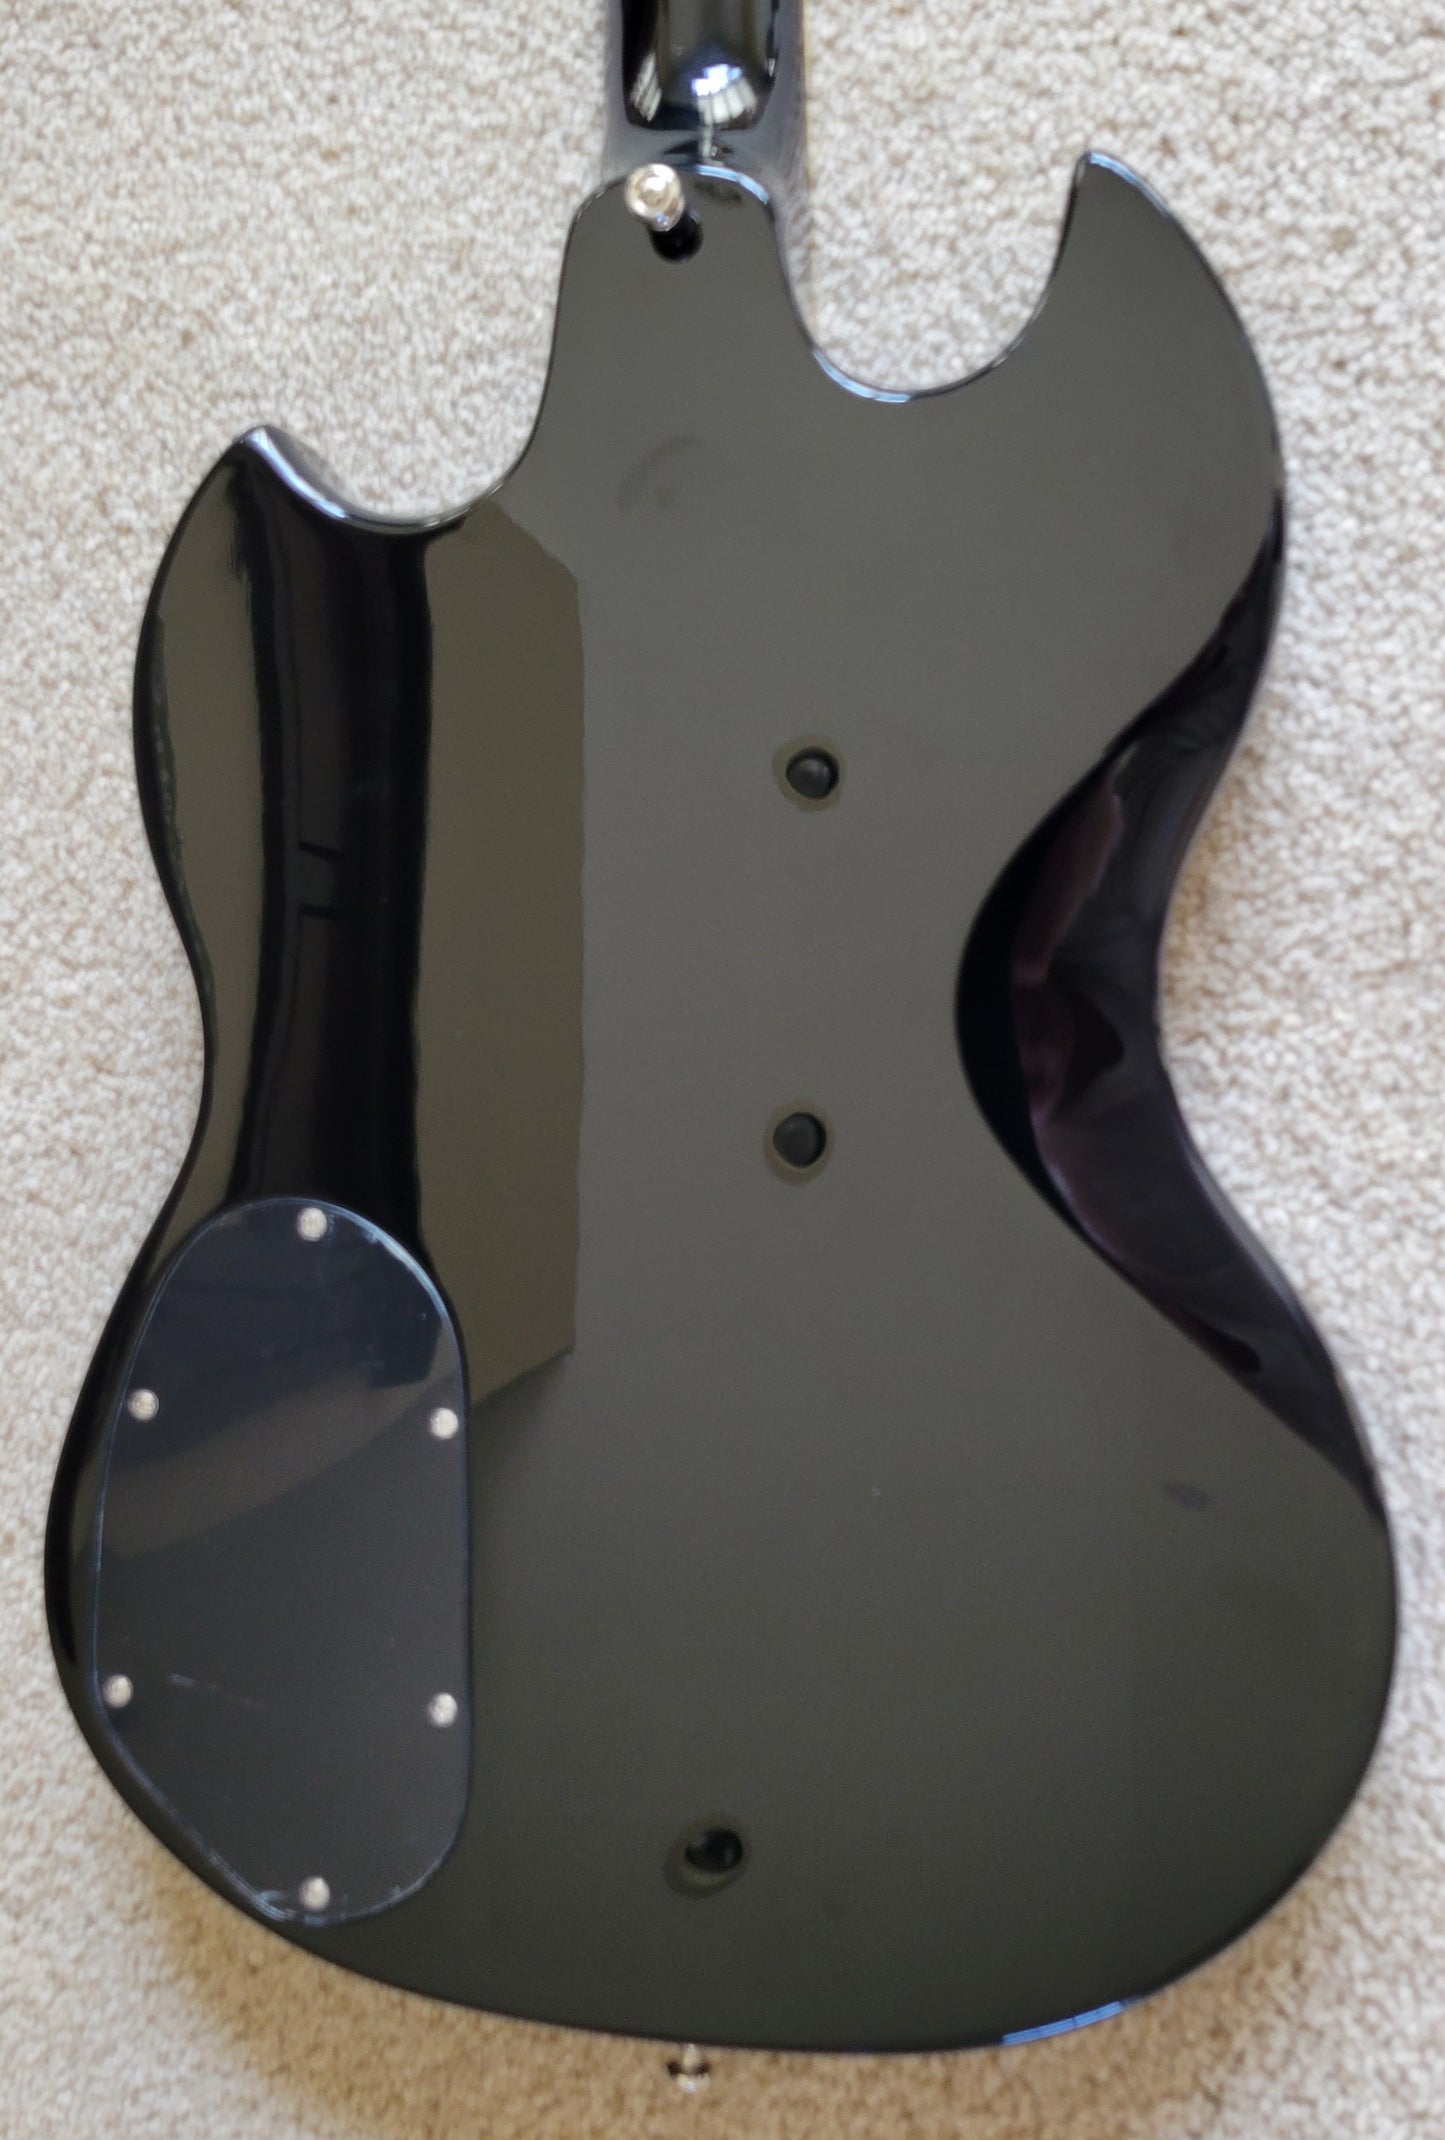 Guild S-100 Polara Electric Guitar, Jet Black Finish, Newark St. Collection